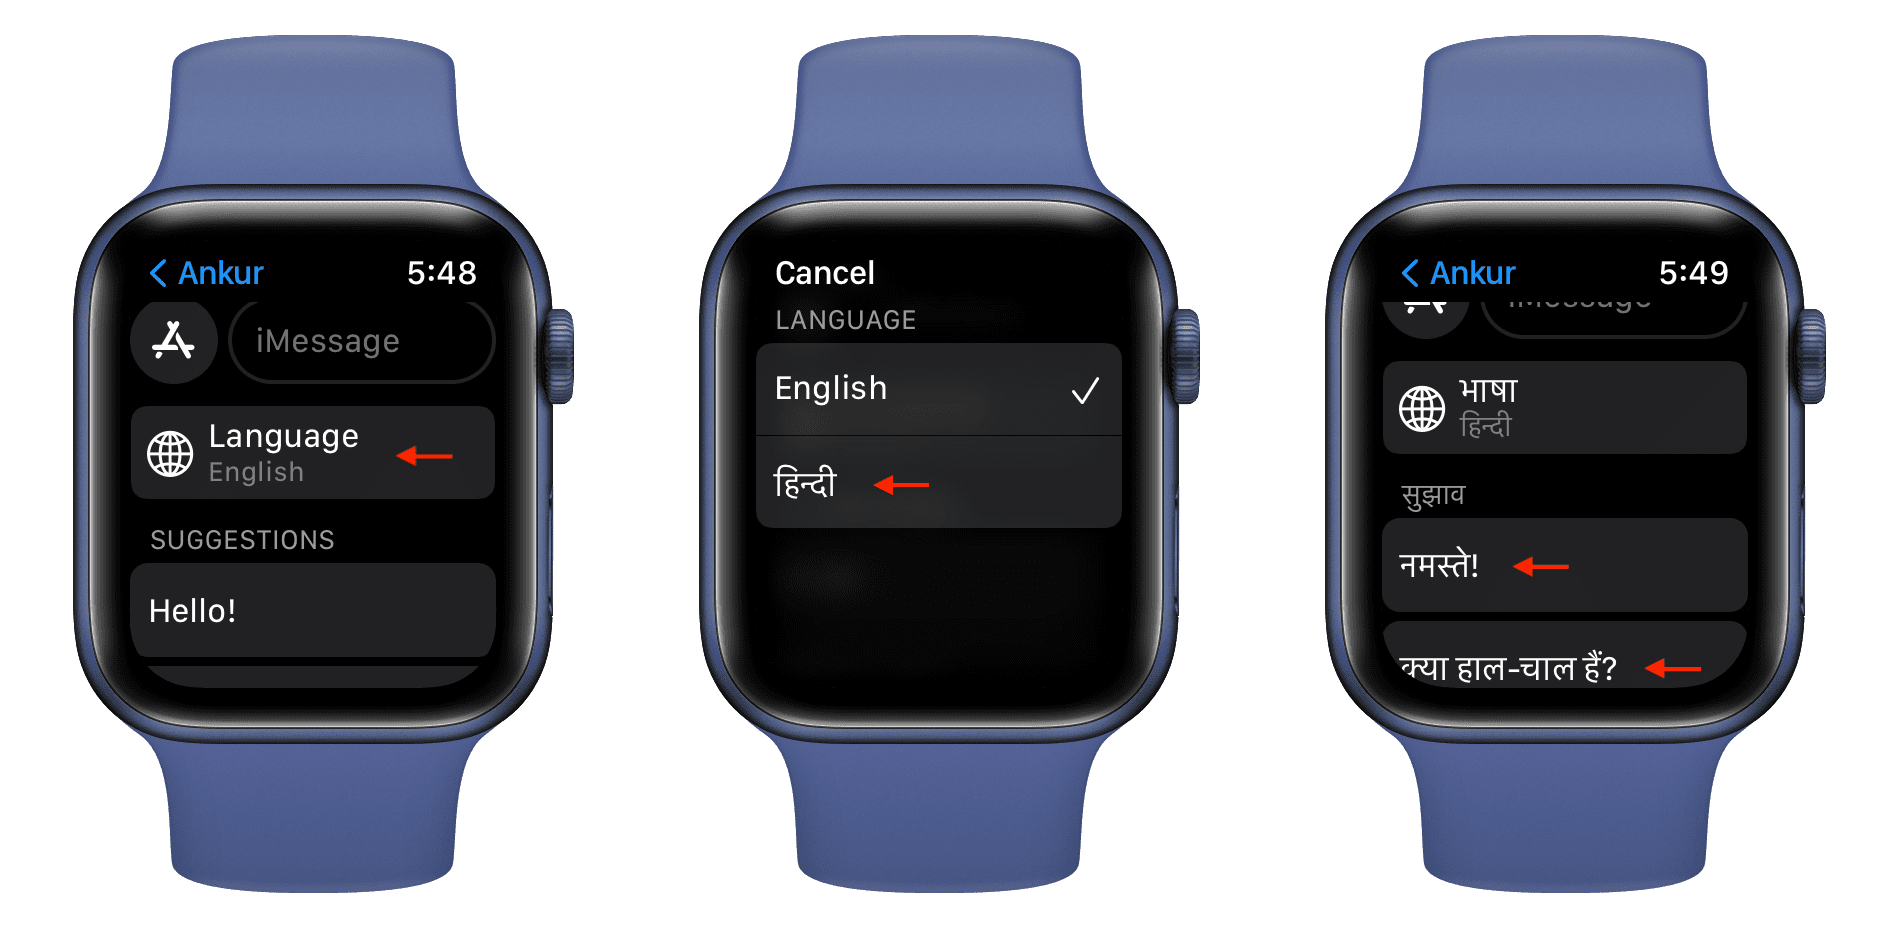 Change language of quick replies on Apple Watch